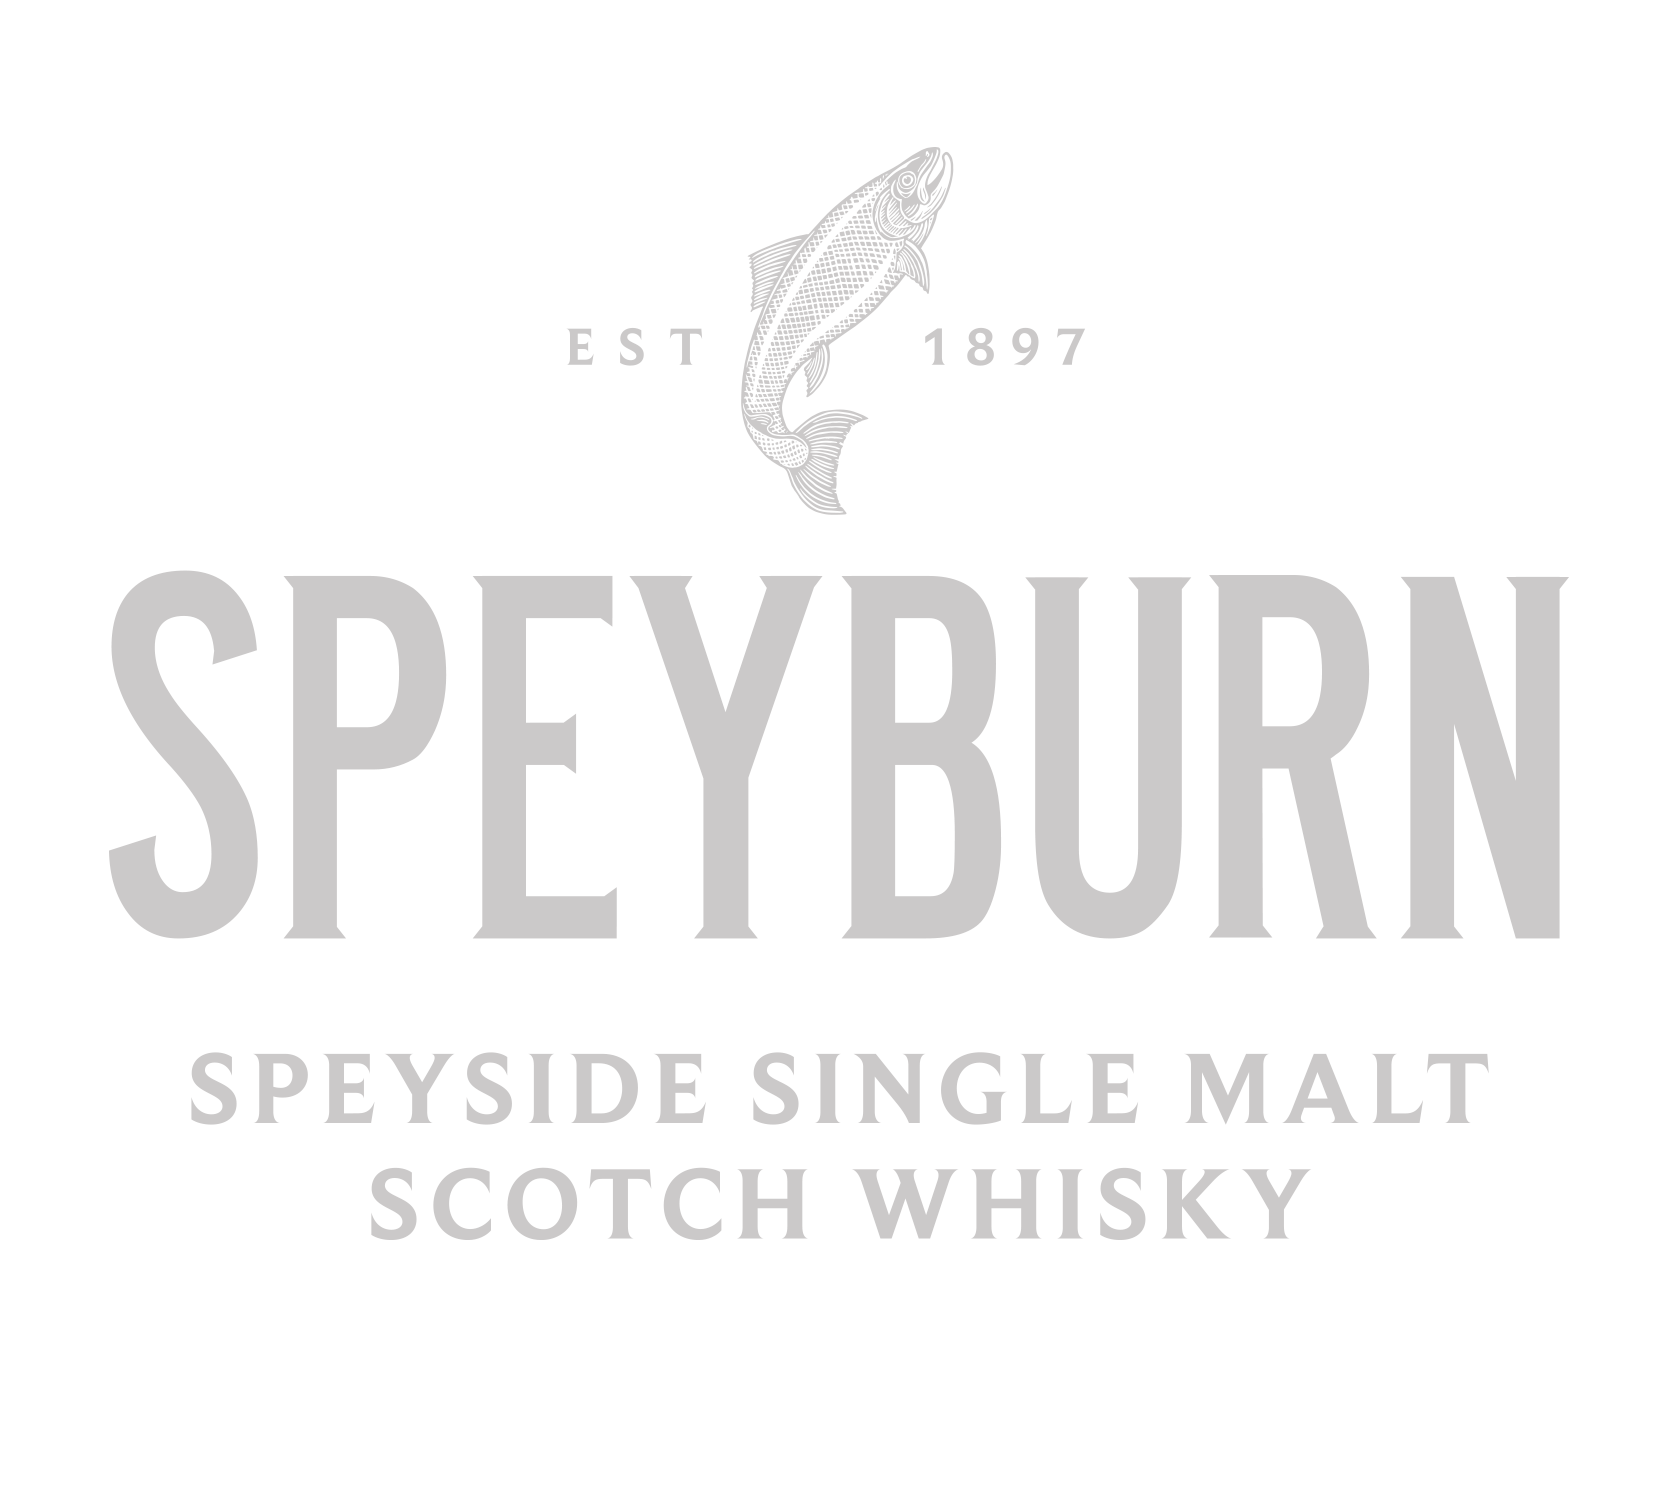 Scotch Whisky Logo - Speyburn. Speyside Single Malt Scotch Whisky